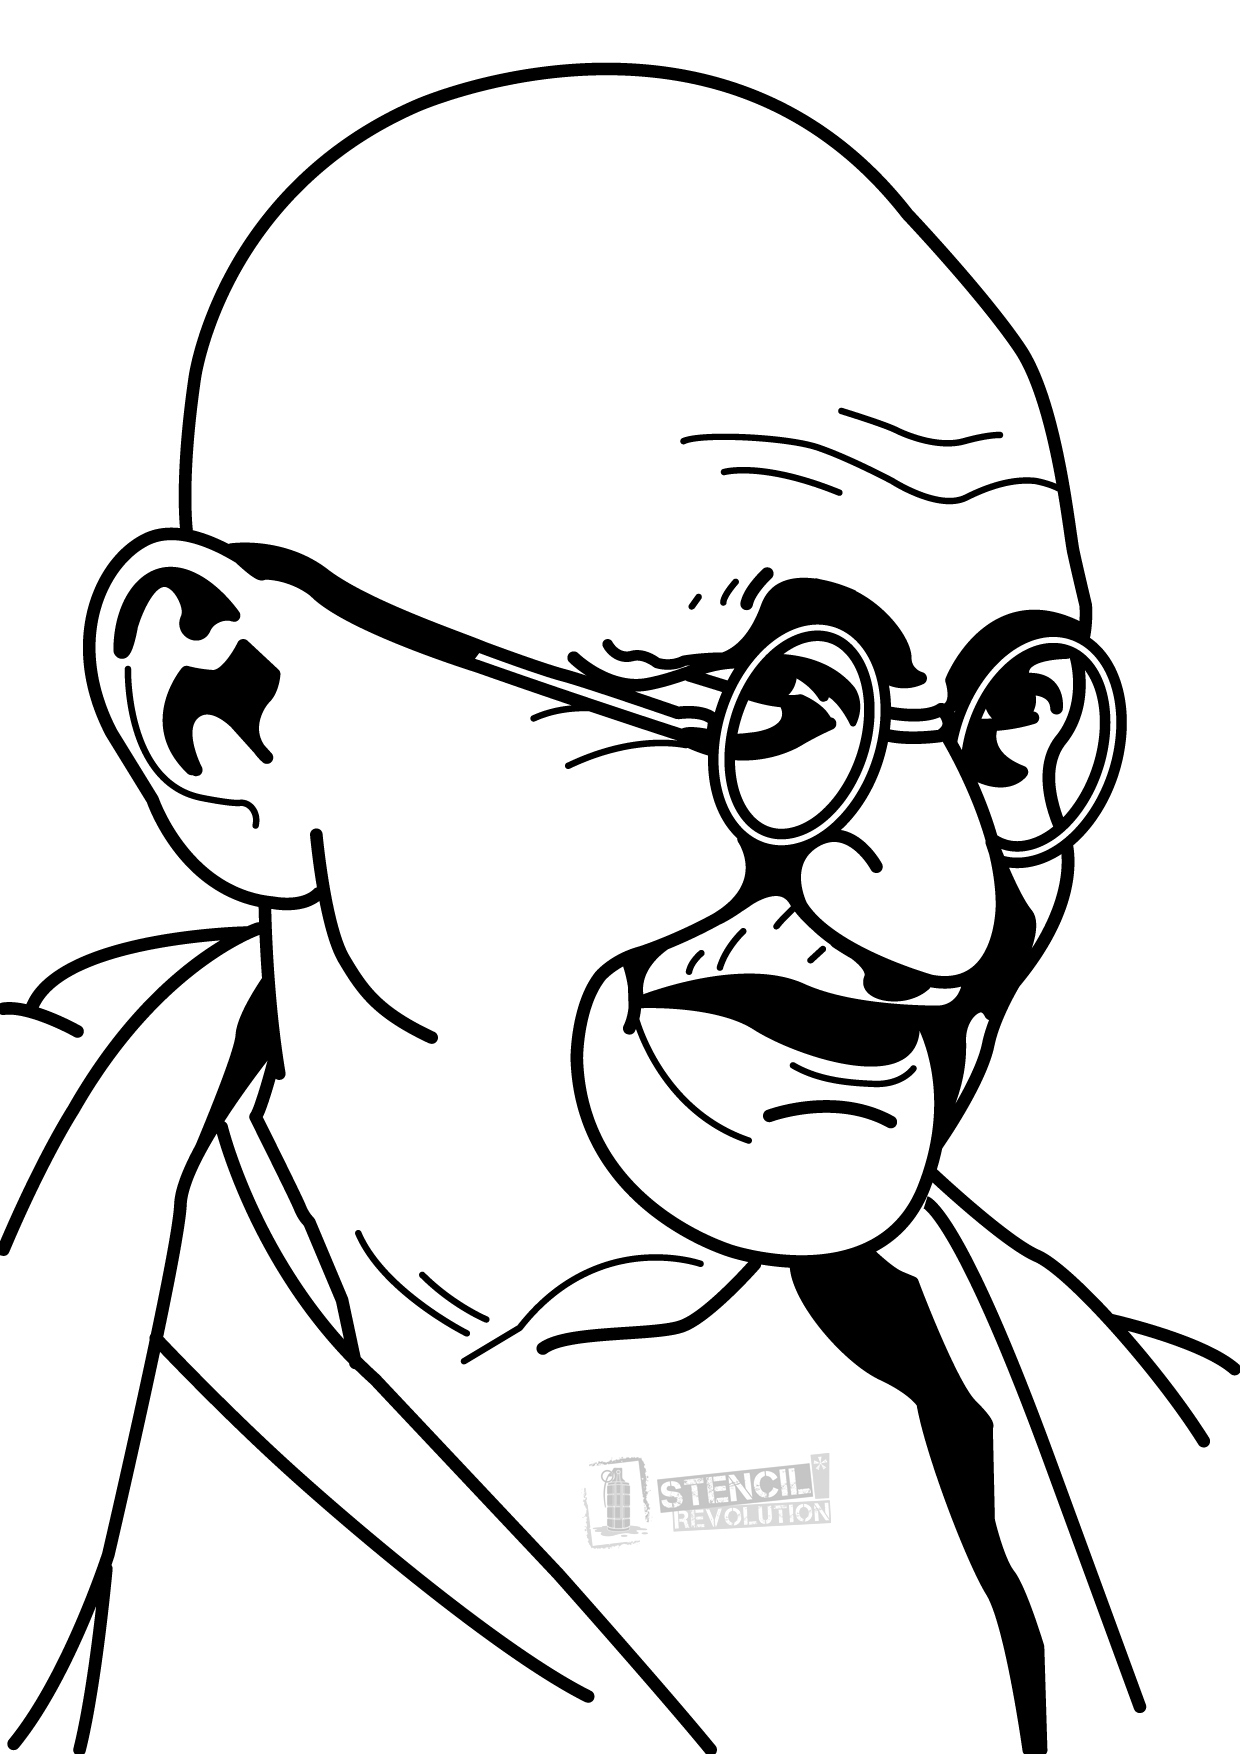 Pencil Sketch Of Mahatma Gandhi at Explore